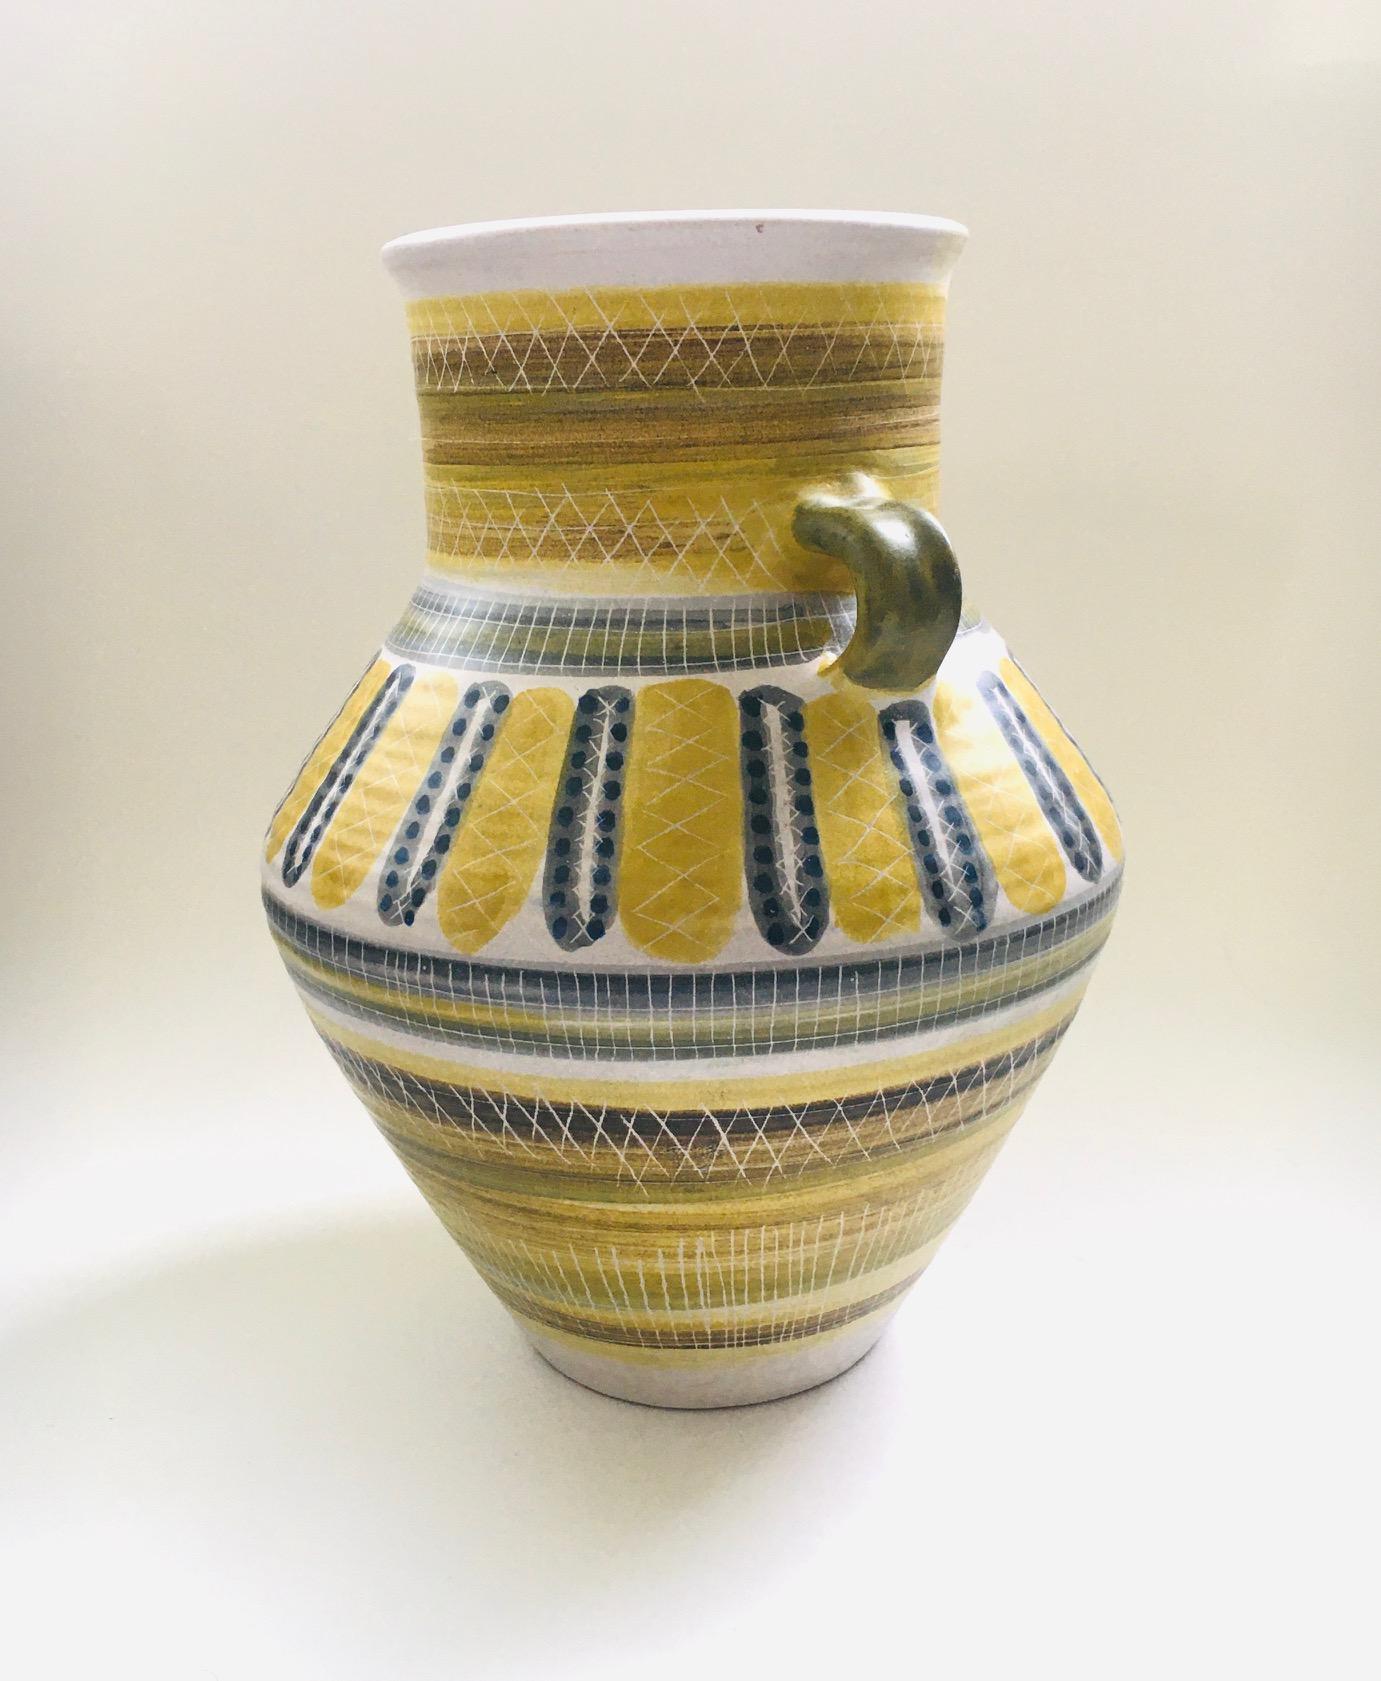 Rare Midcentury Art Pottery Studio Vase by Marcel Guillot, France 1950's For Sale 2